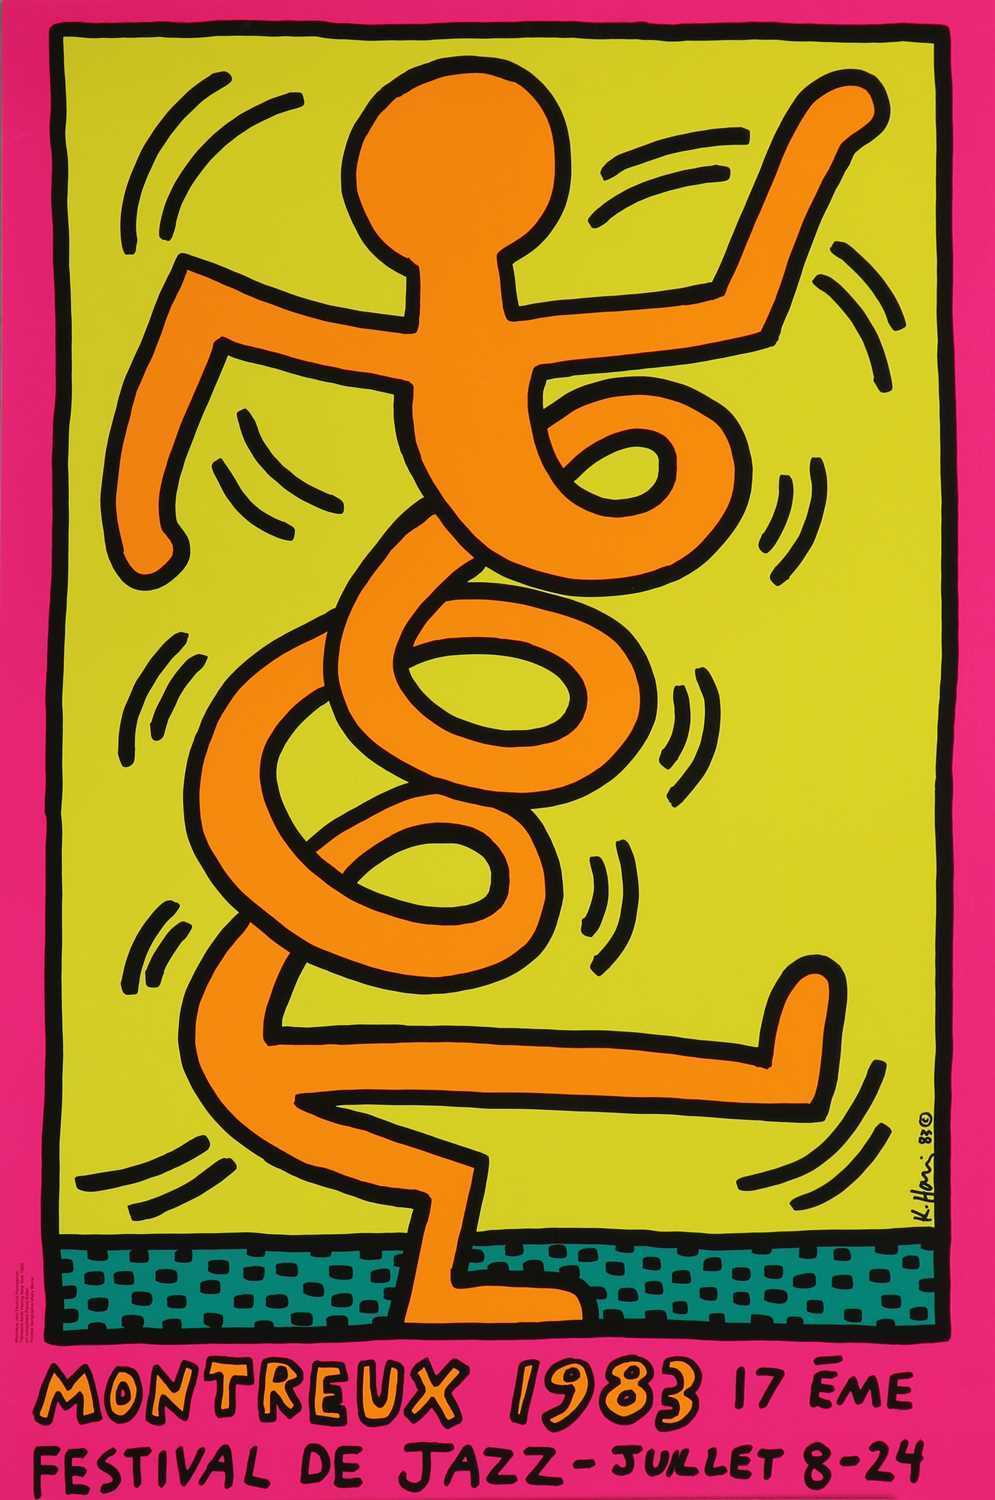 Lot 281 - Keith Haring (American, 1958-1990)